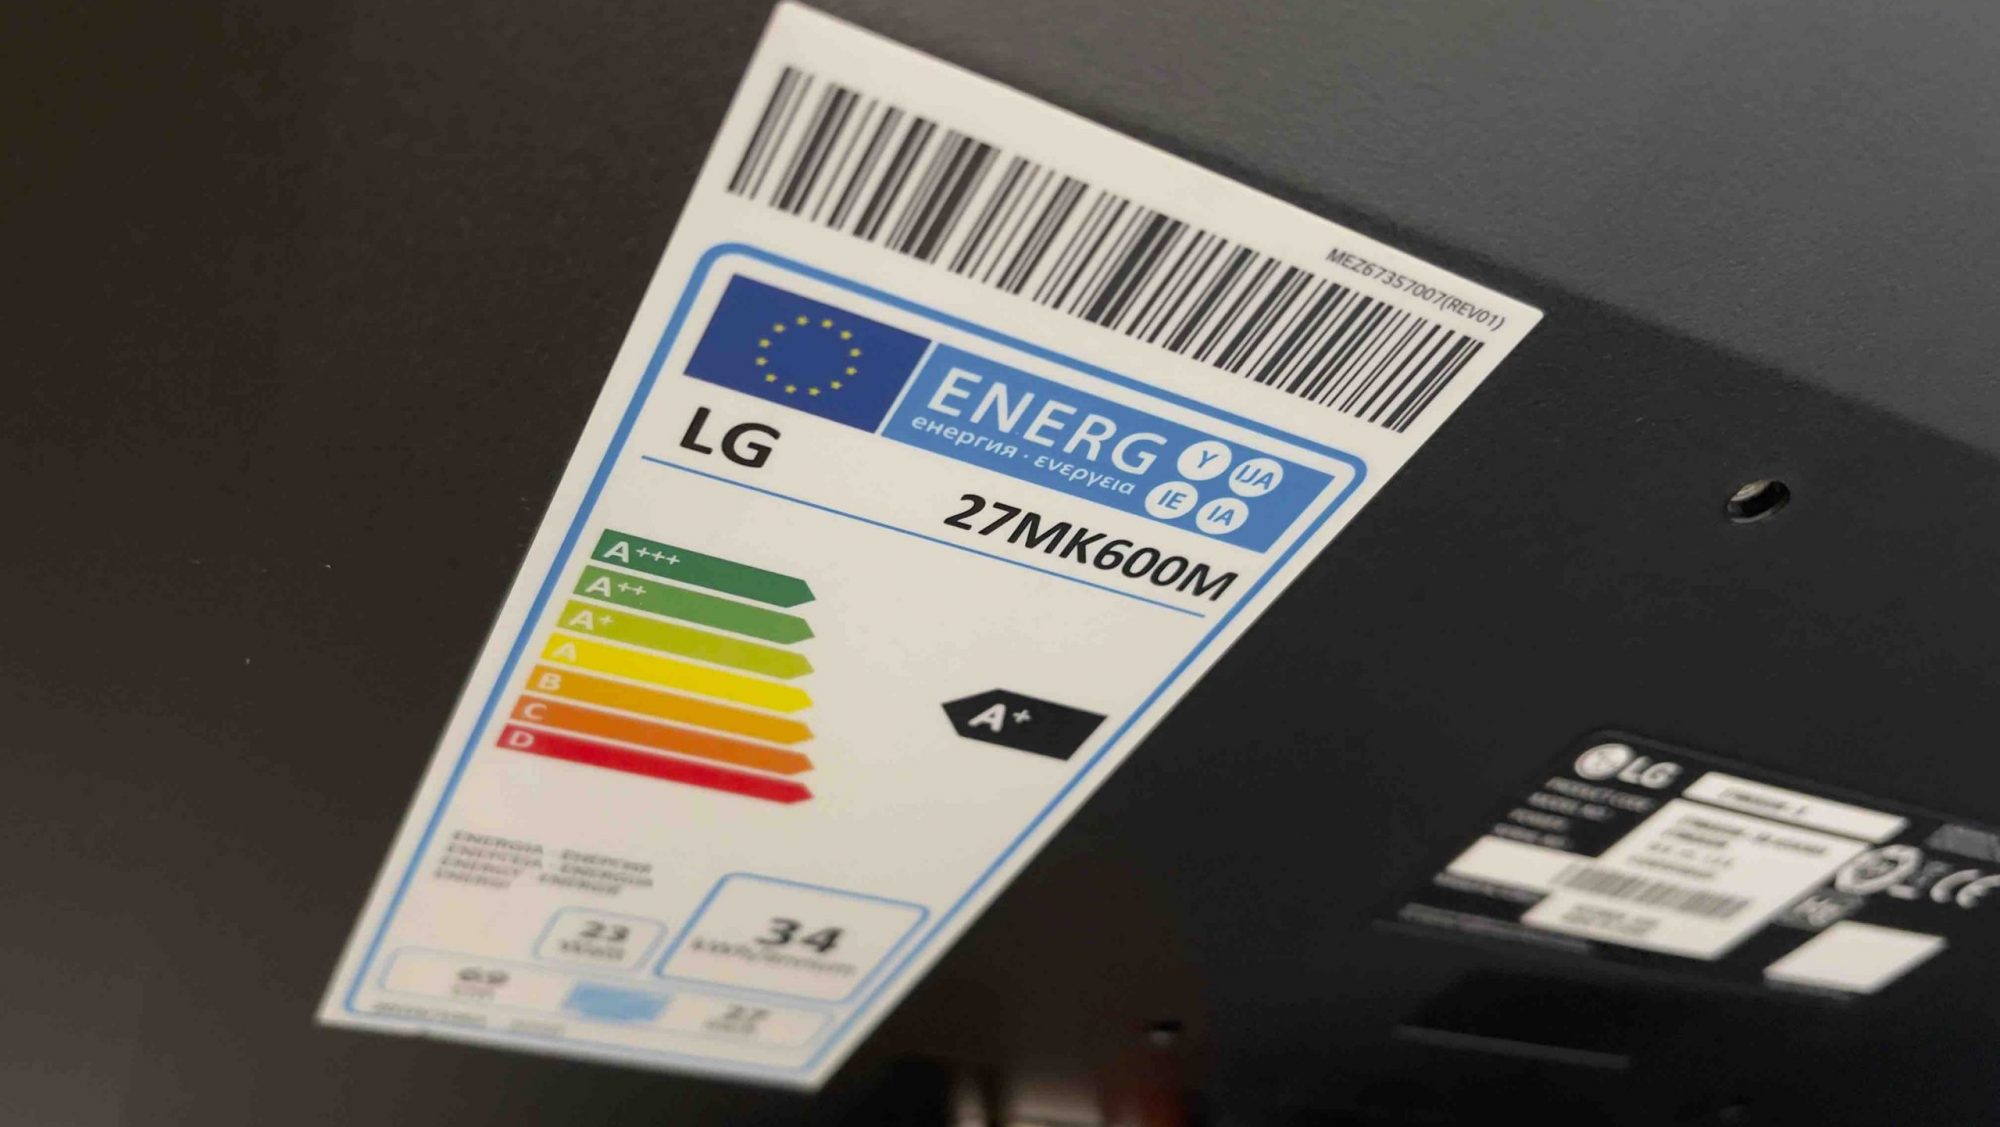 Greentech Study Environment Label Energy Efficiency Home Appliances Eco Mode Energy Efficiency